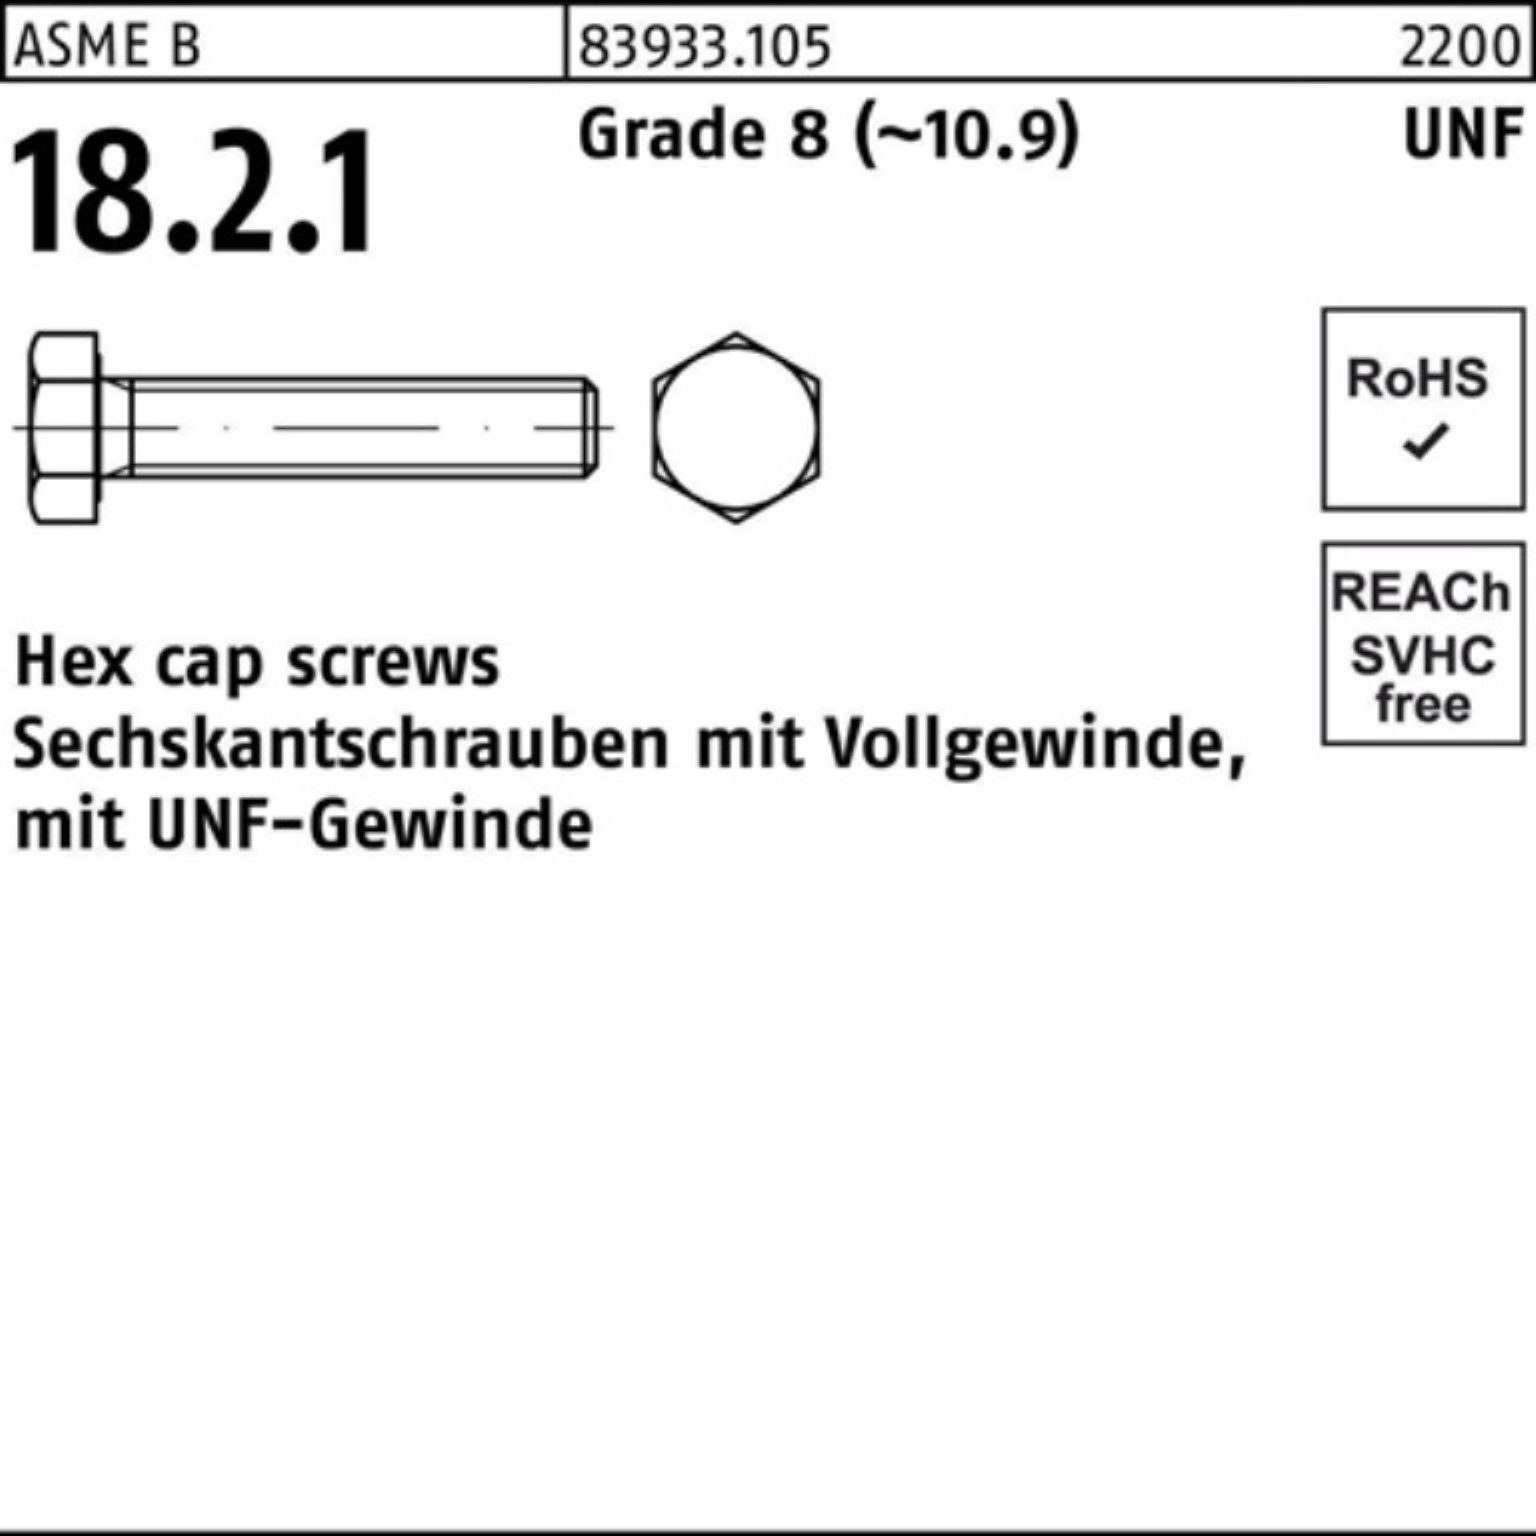 Reyher Sechskantschraube 100er Pack Sechskantschraube R 83933 UNF-Gewinde VG 7/16x 7/8 Grade 8